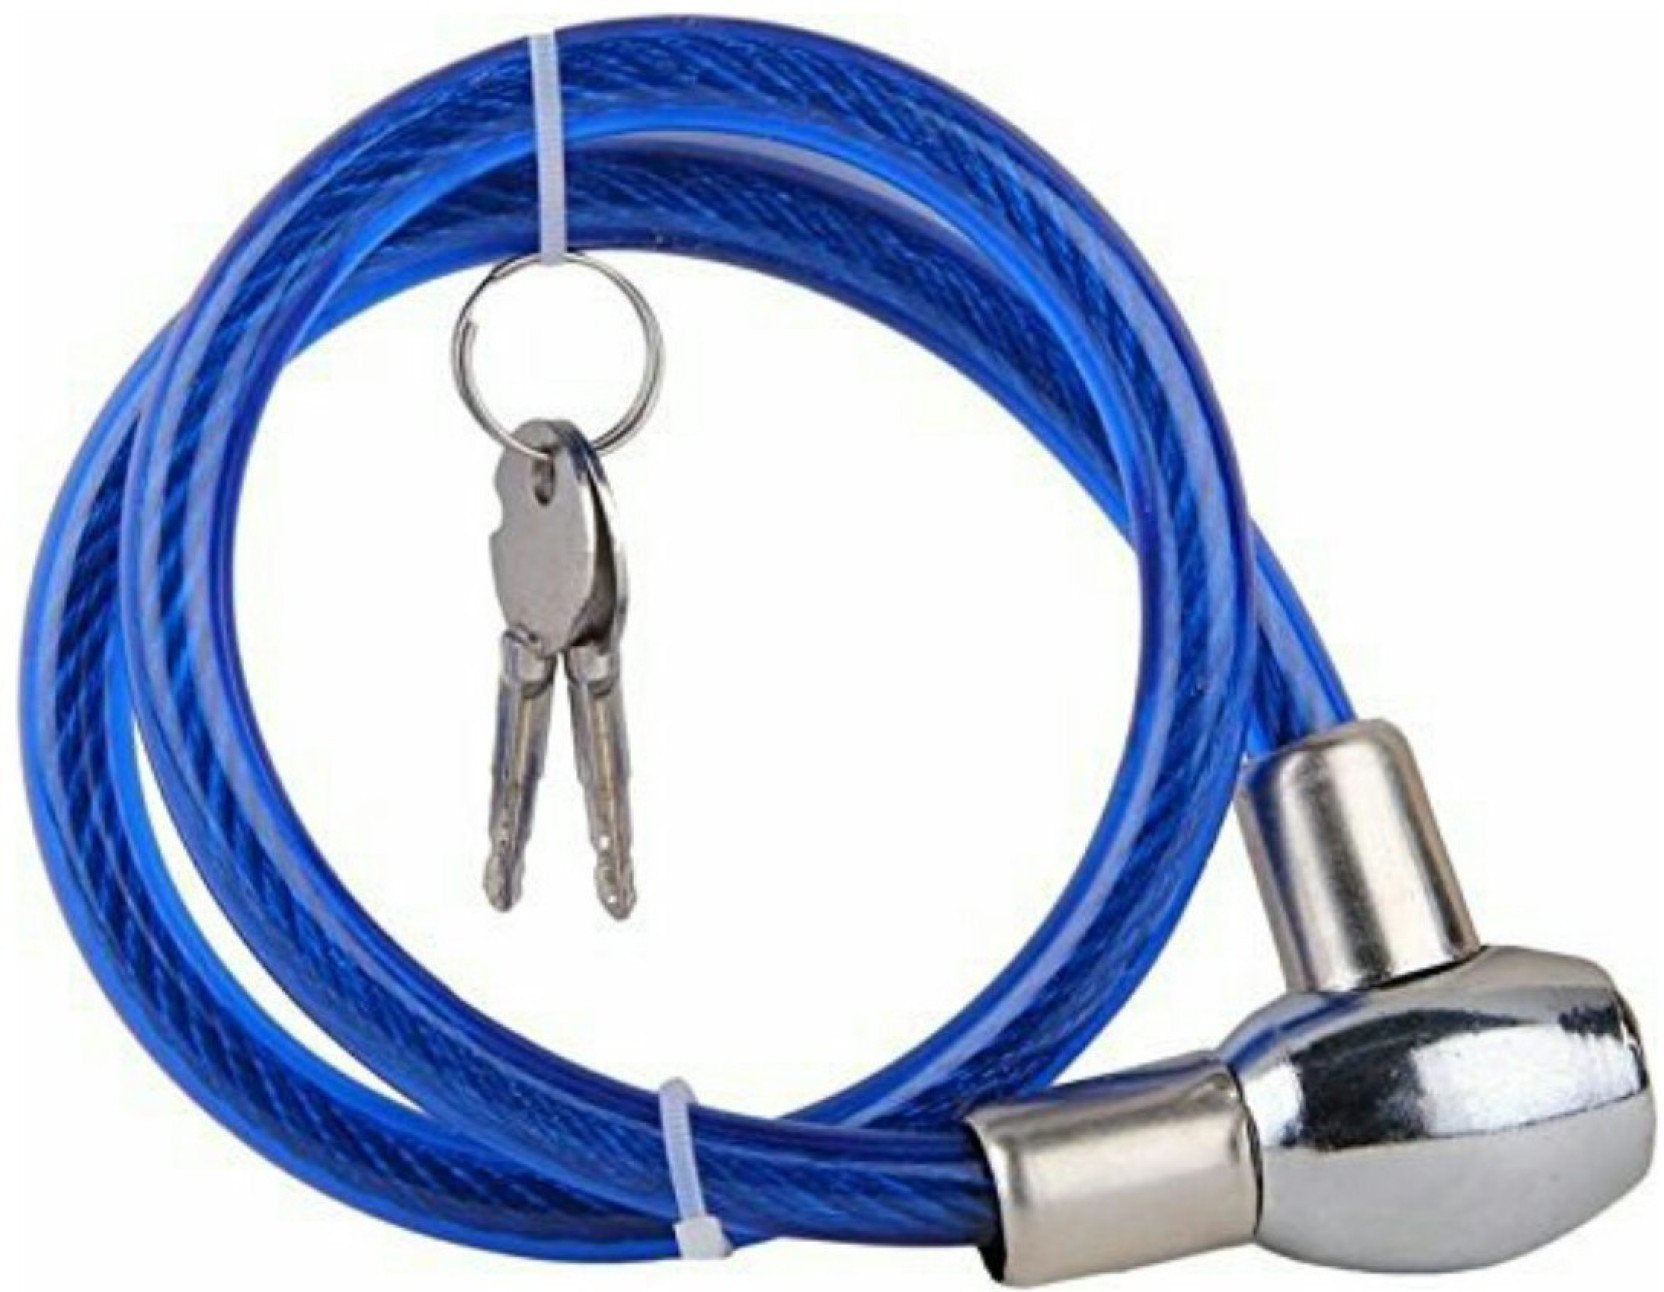 0228 Multi Purpose Key-Lock (Cable Lock) - SkyShopy